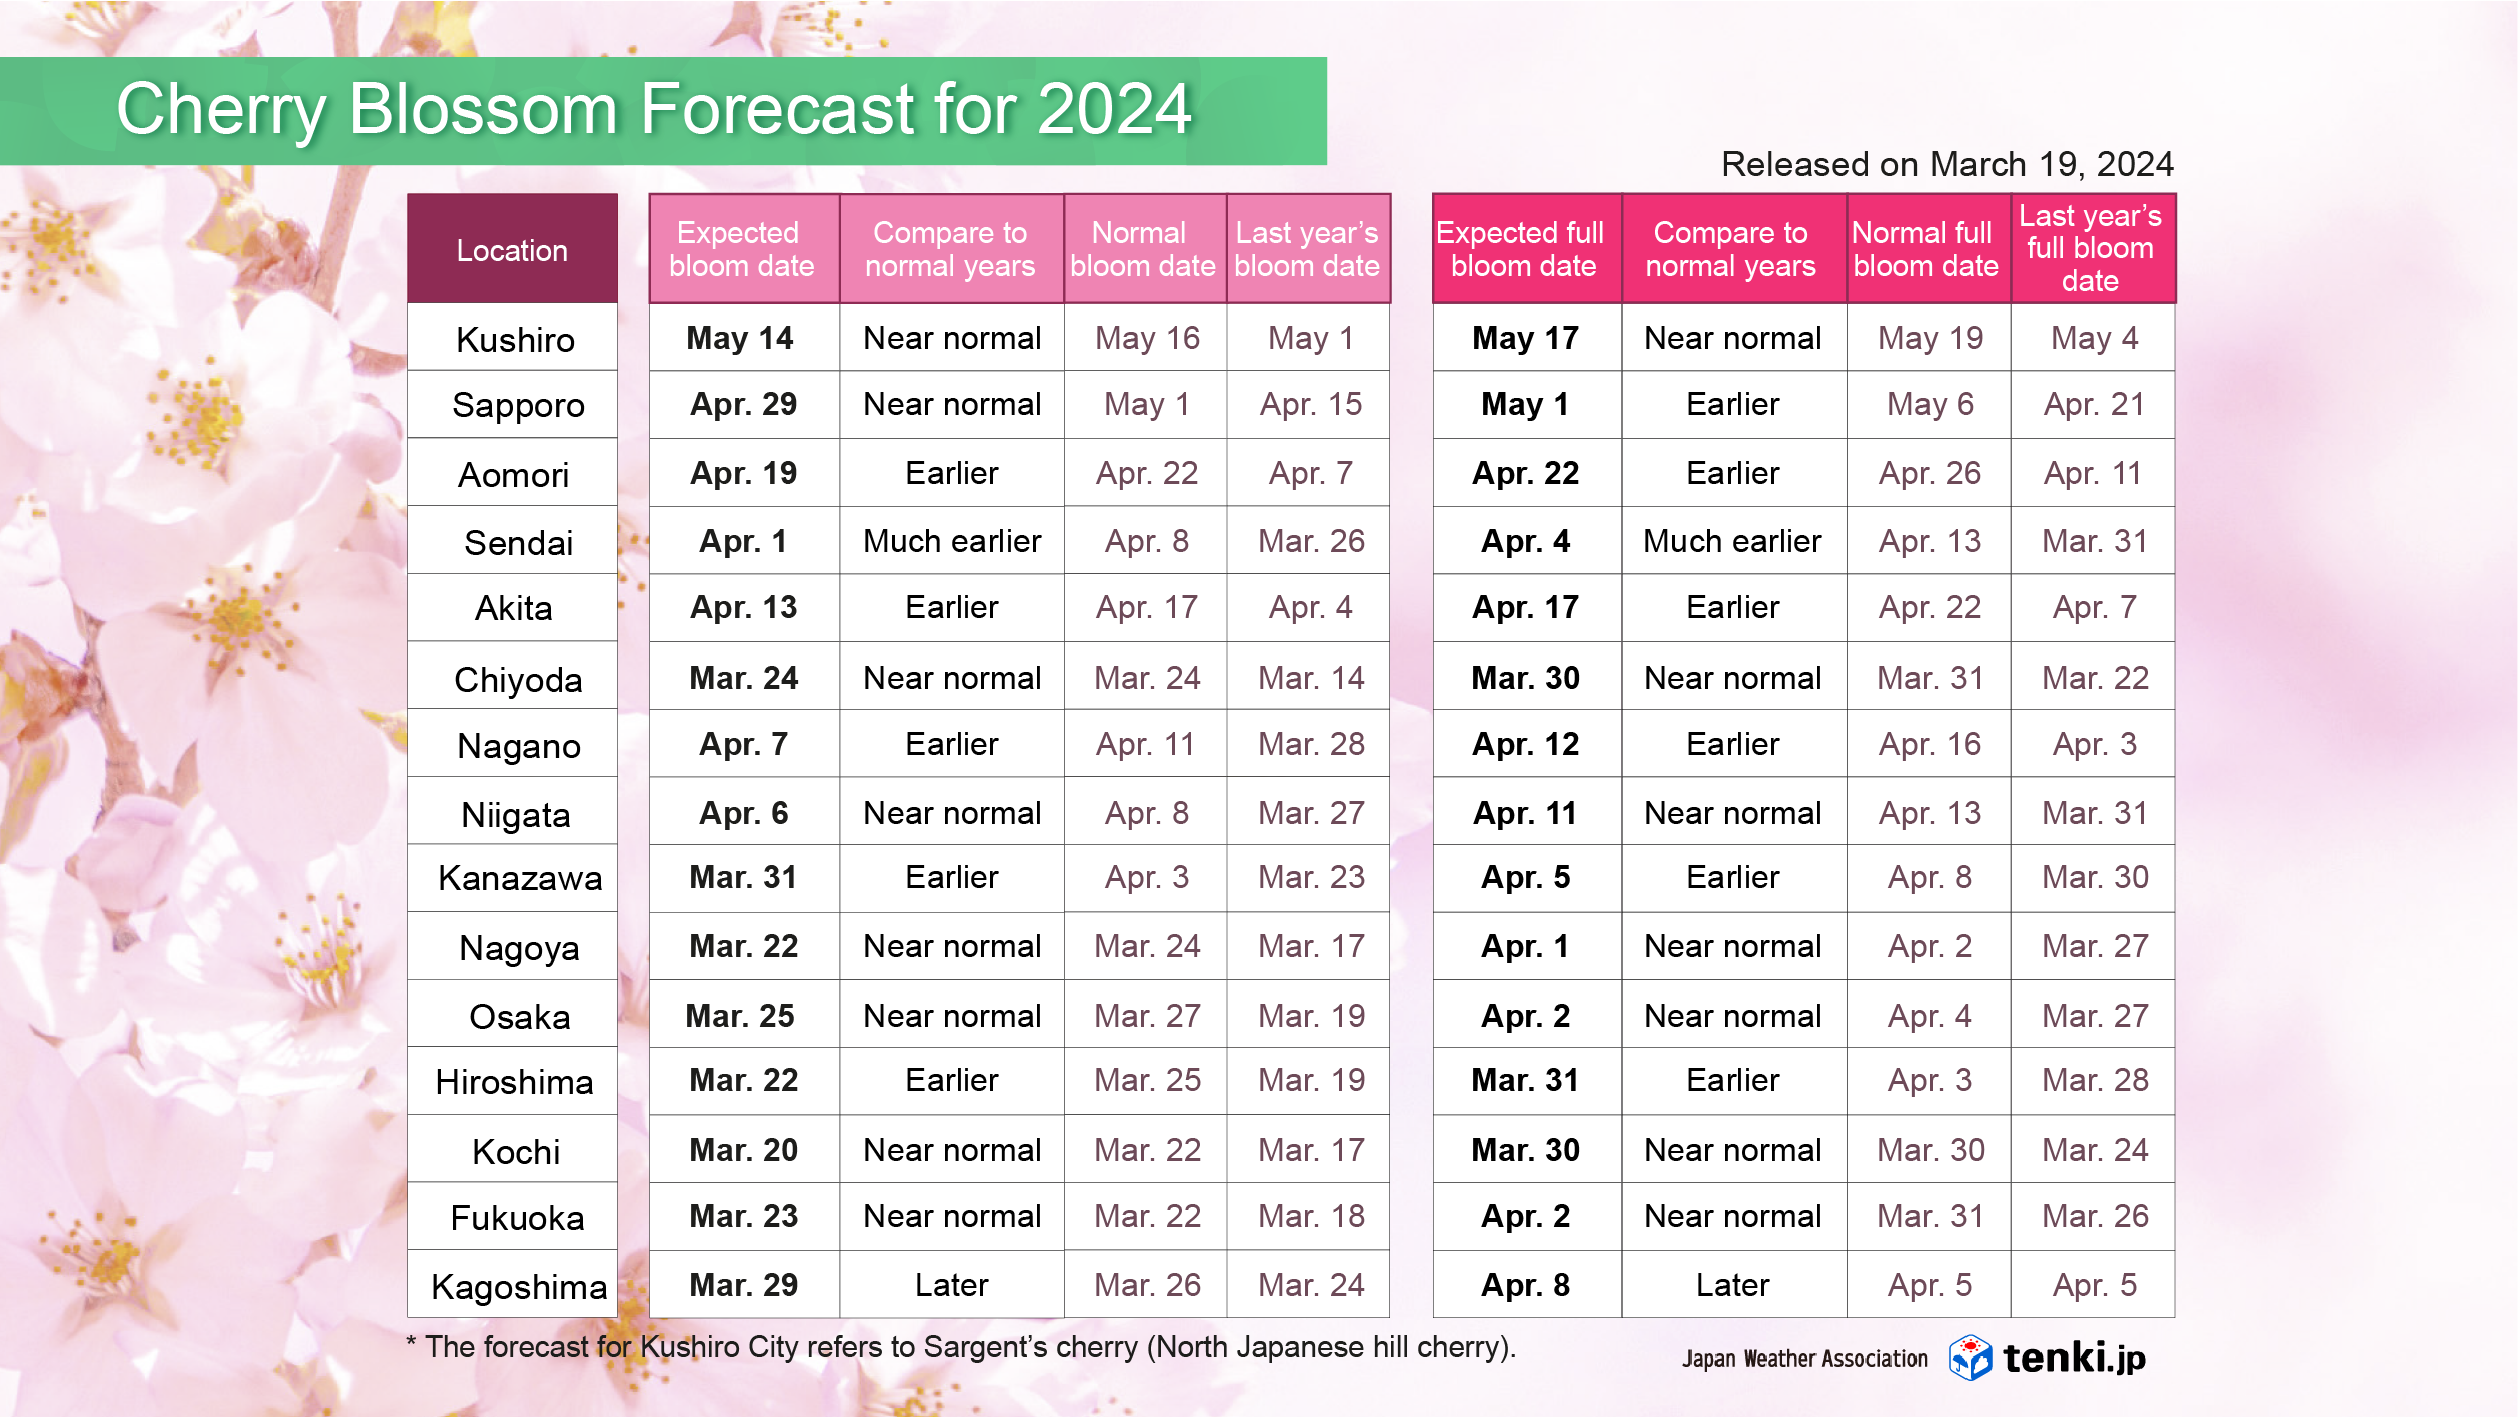 Bloom Forecast Dates (Major Locations)